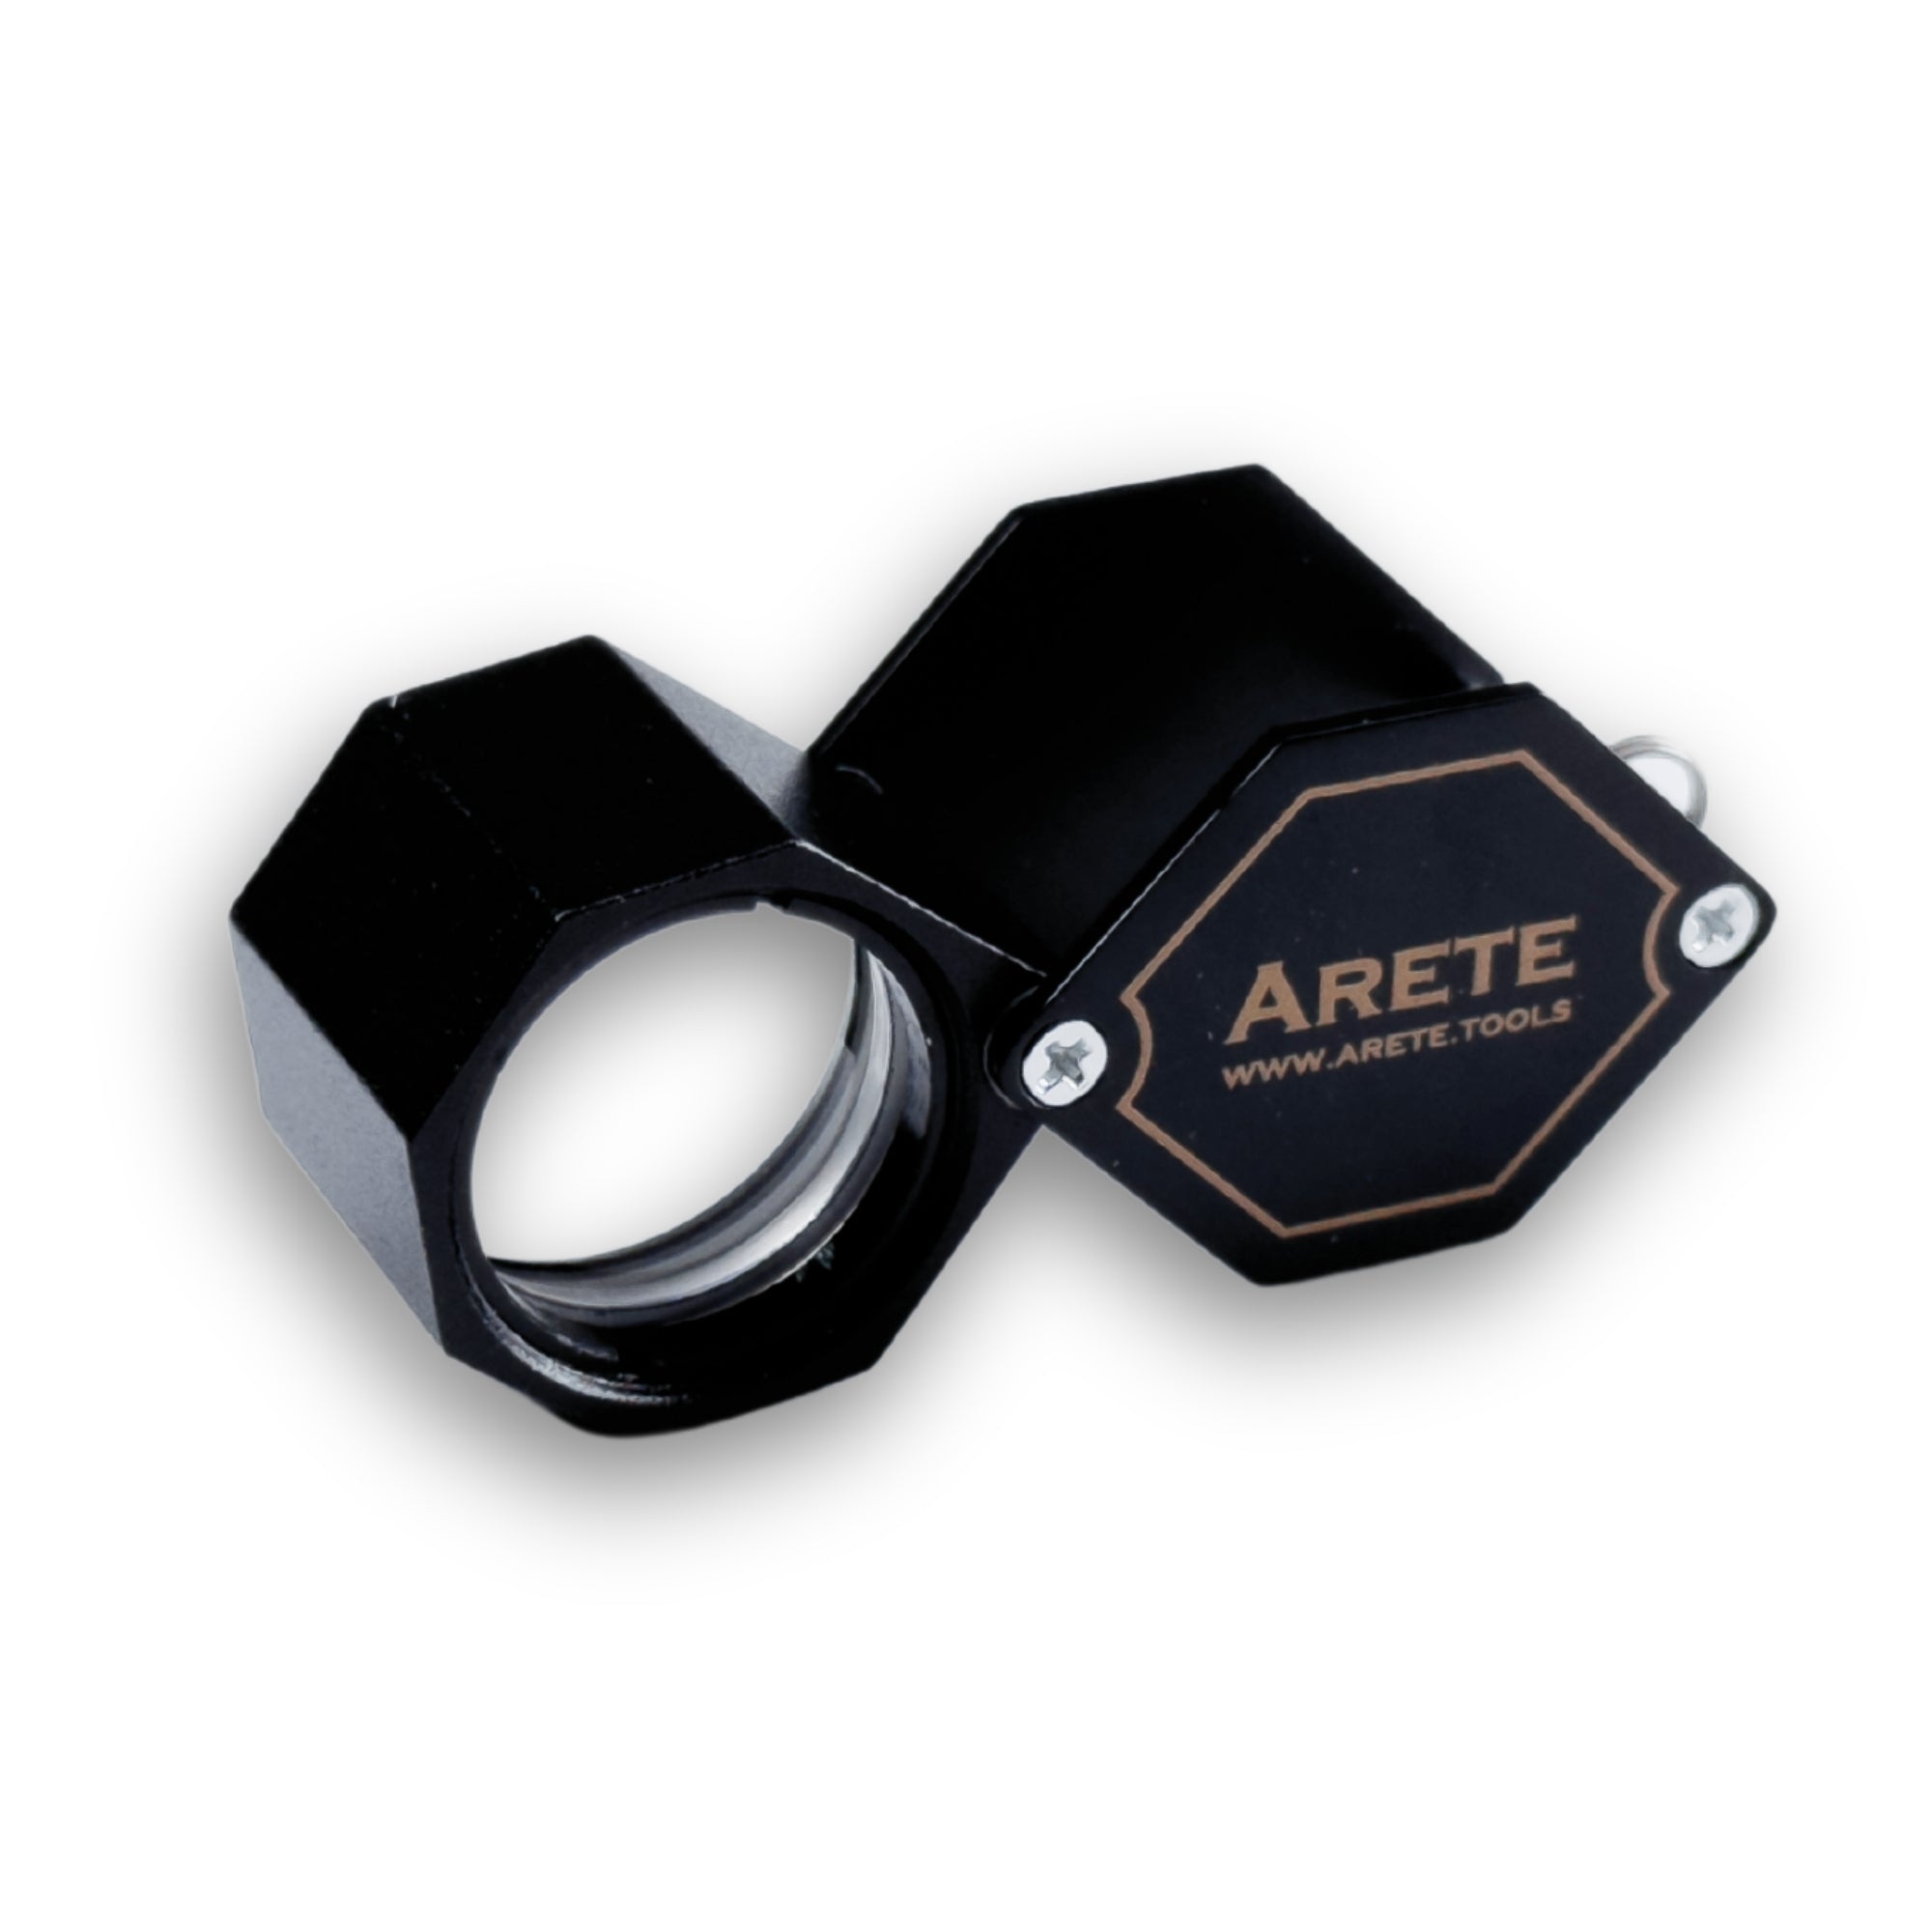 Arete jewelry loupe black 10x 20.5 mm